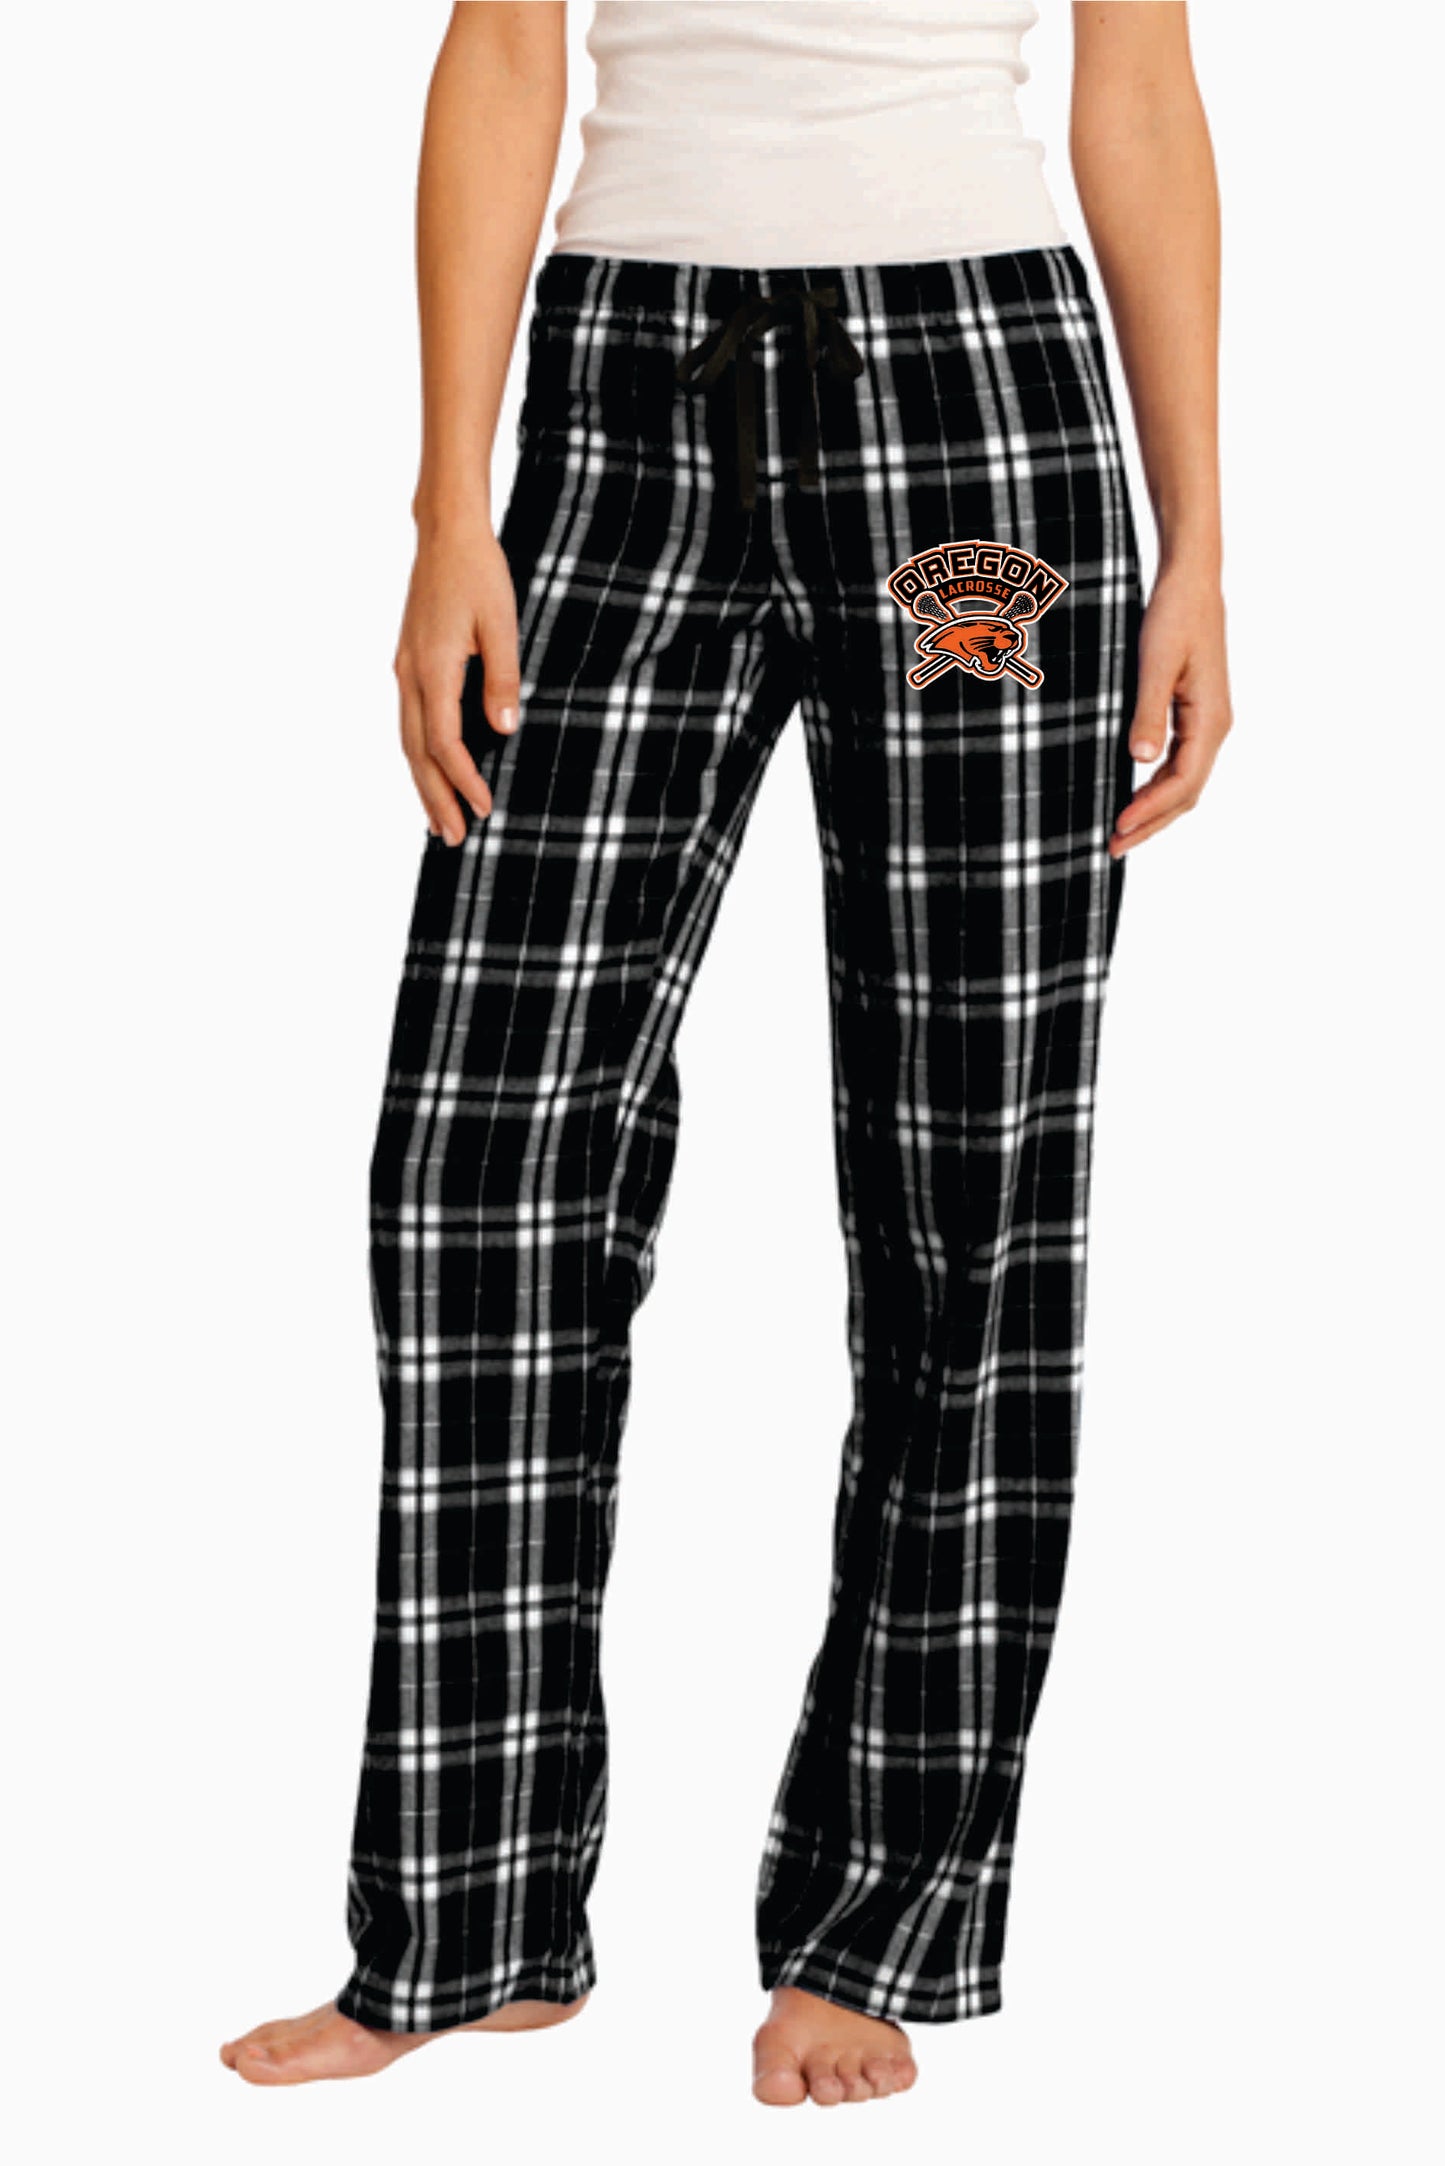 Oregon Lacrosse Plaid Flannel Pajama Pants Men Women  V1